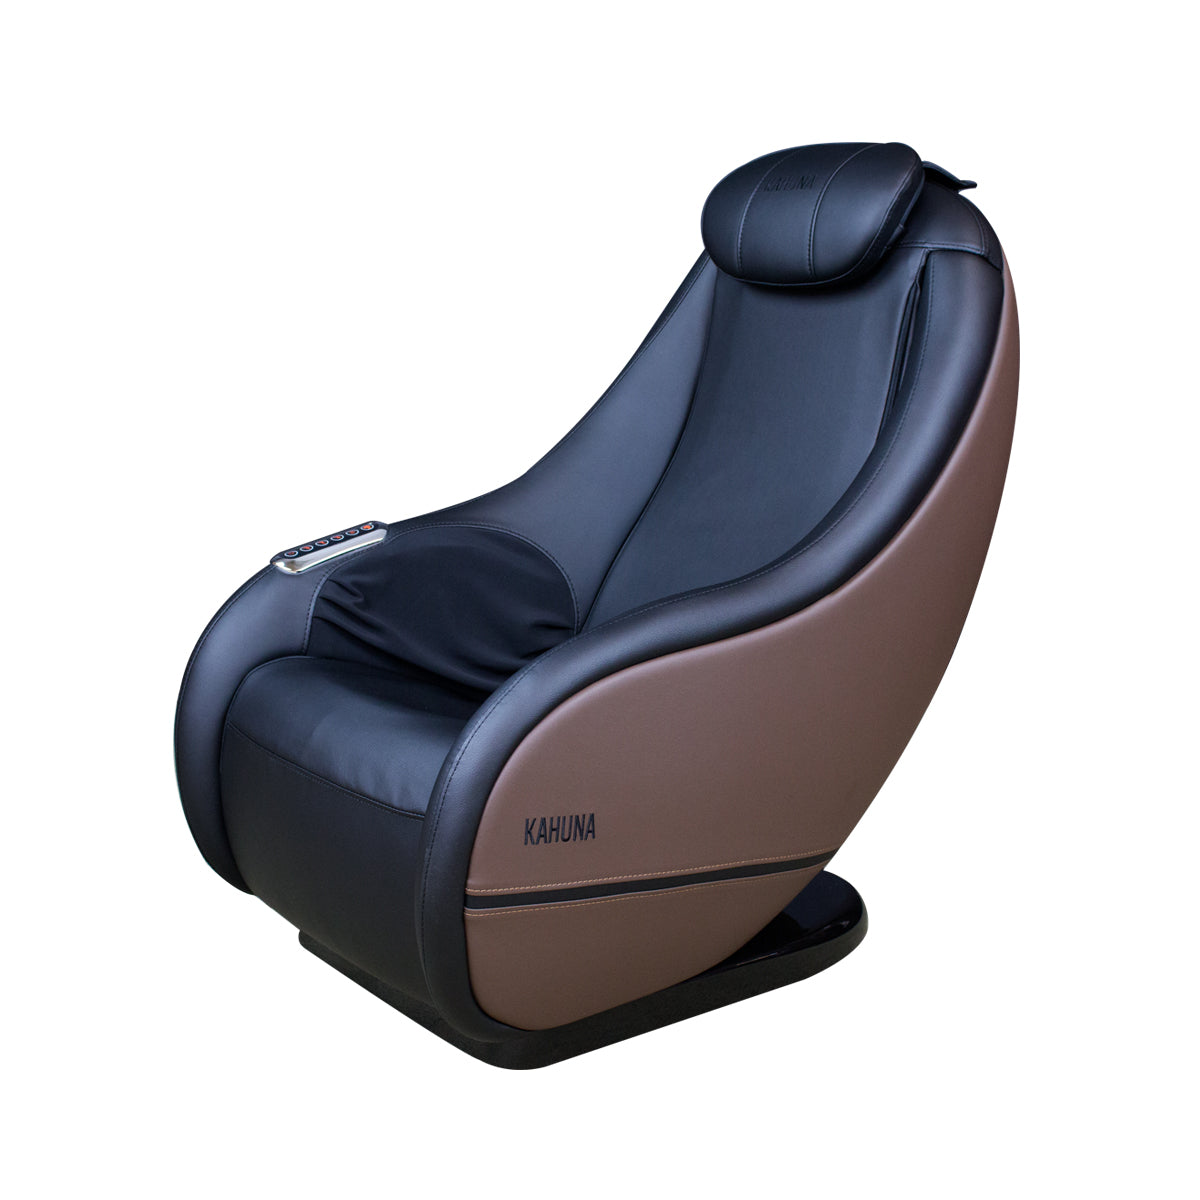 Kahuna HANI L-TRACK COMPACT Massage Chair Brown/Black